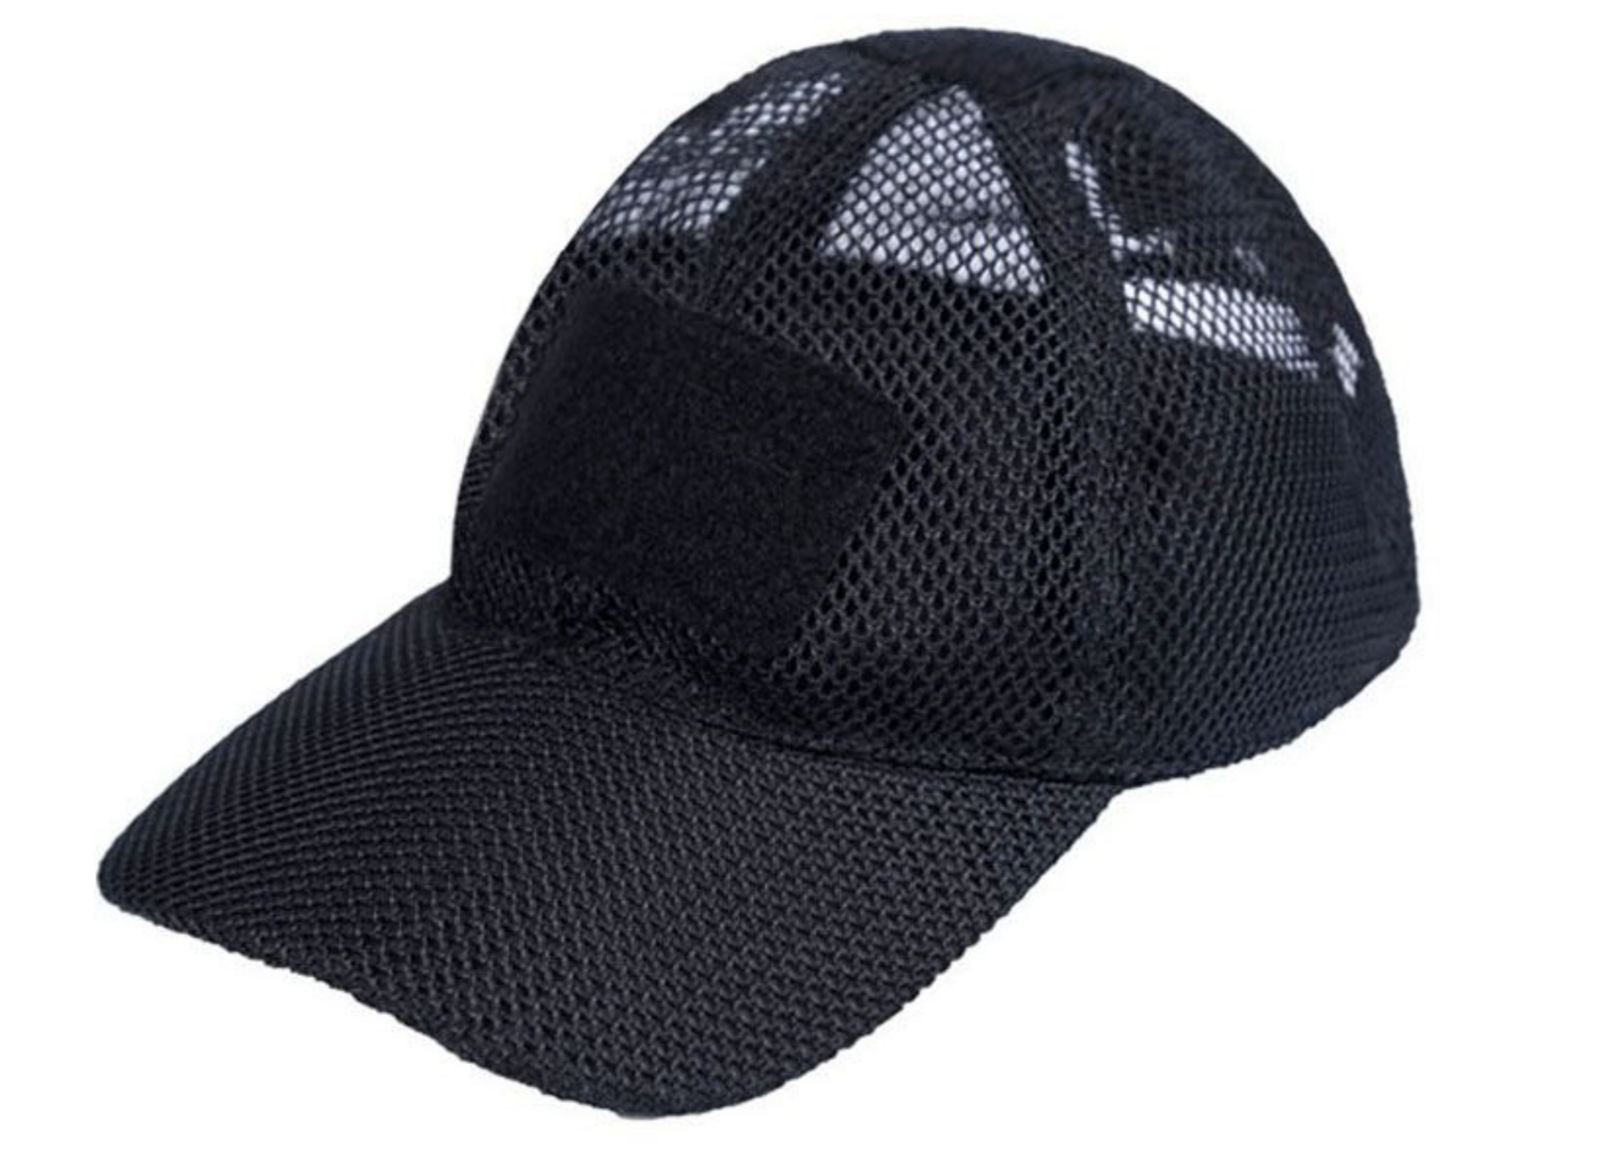 Big foot baseball caps with mesh (black) – Extreme Airsoft